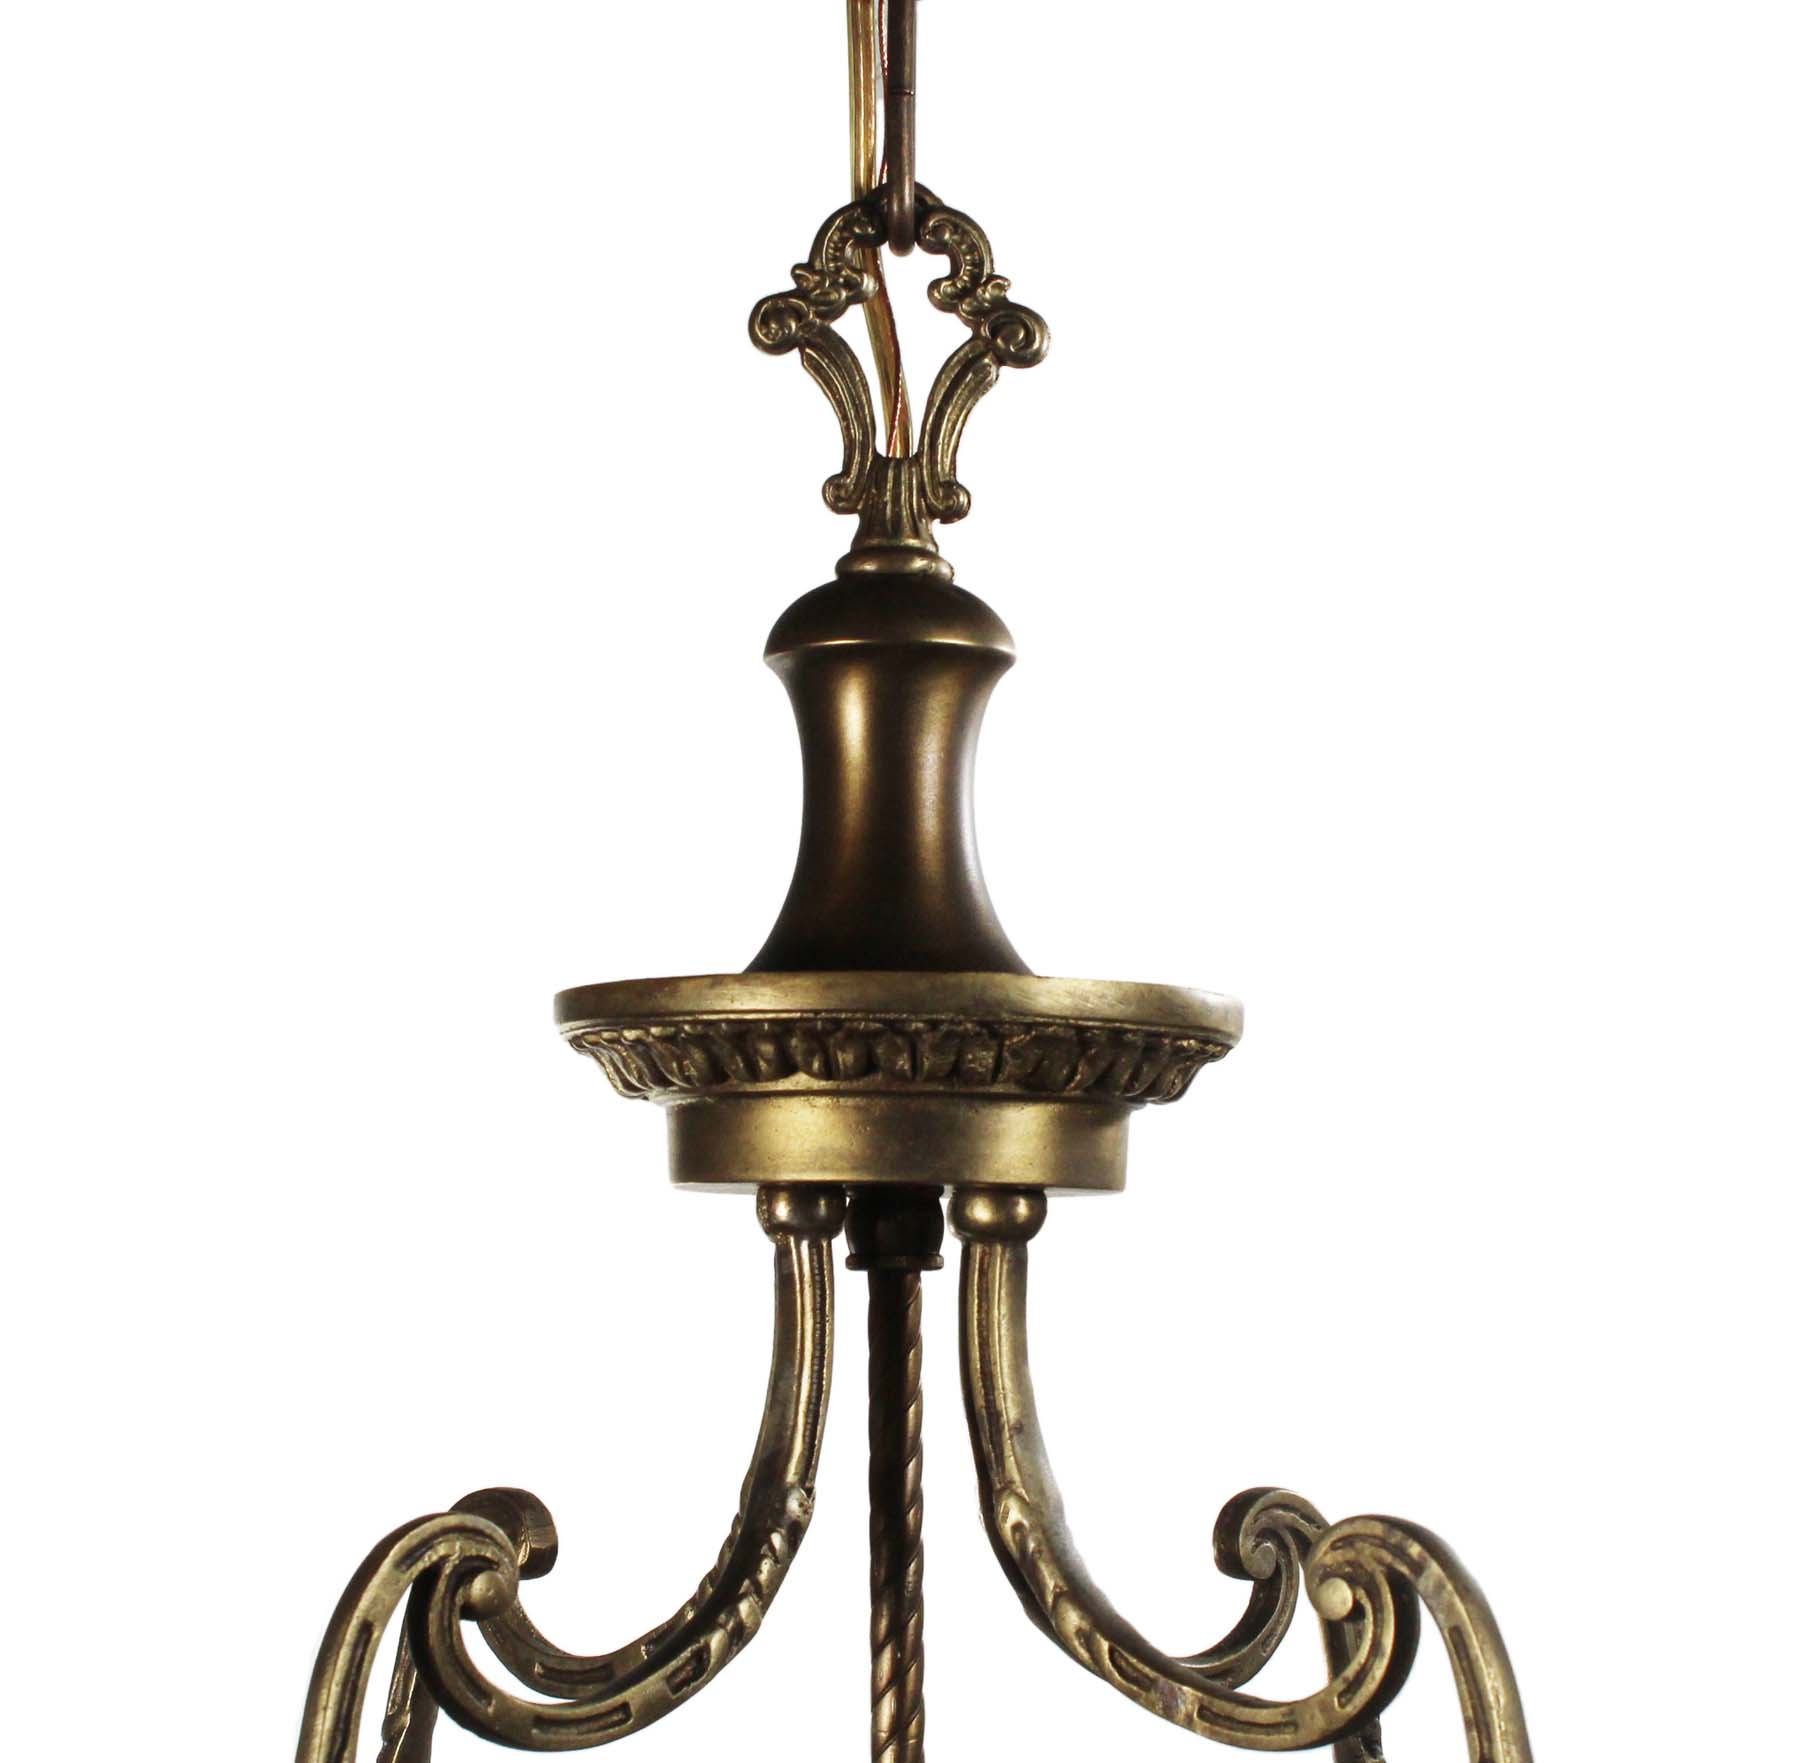 SOLD Neoclassical Brass Tiered Chandelier, Antique Lighting-68645